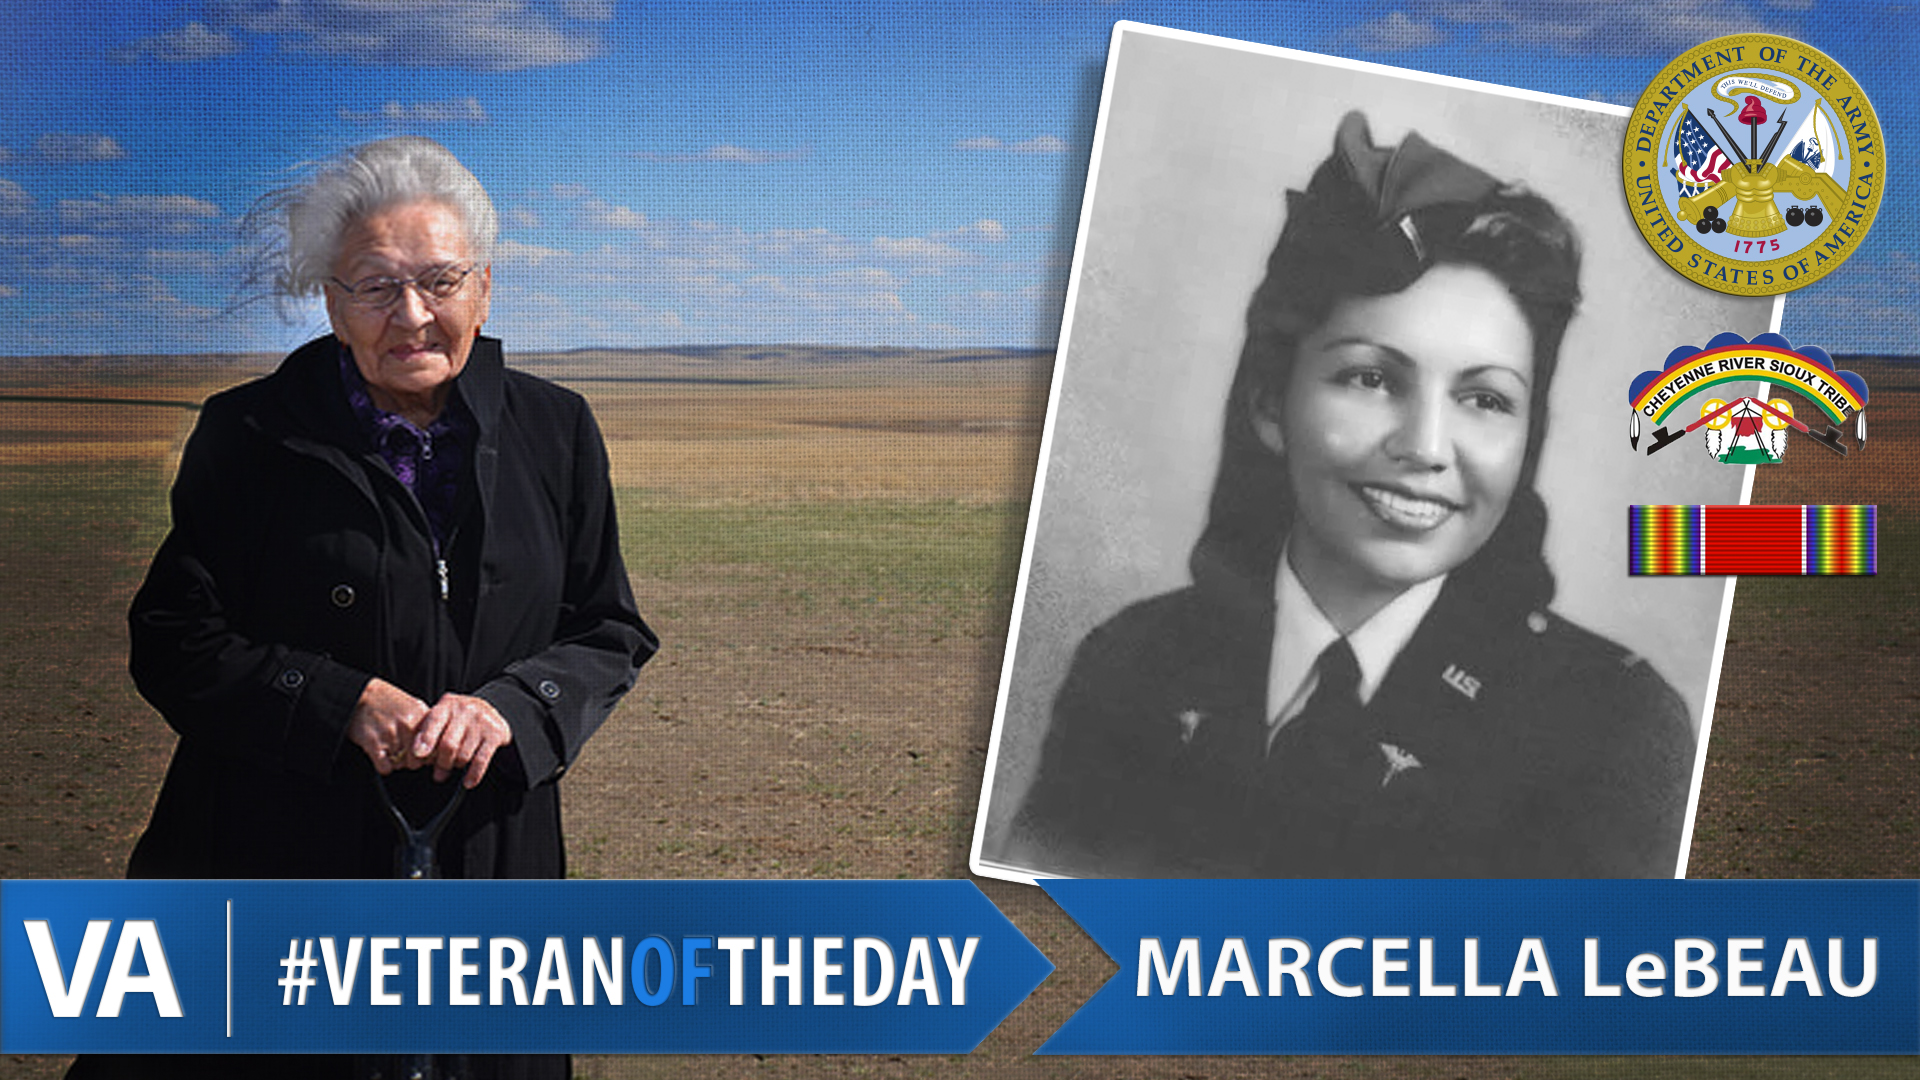 graphic shows Veteran Marcella LeBeau standing in a field. Text reads: VA - #VETERANOFTHEDAY - Marcella LeBeau